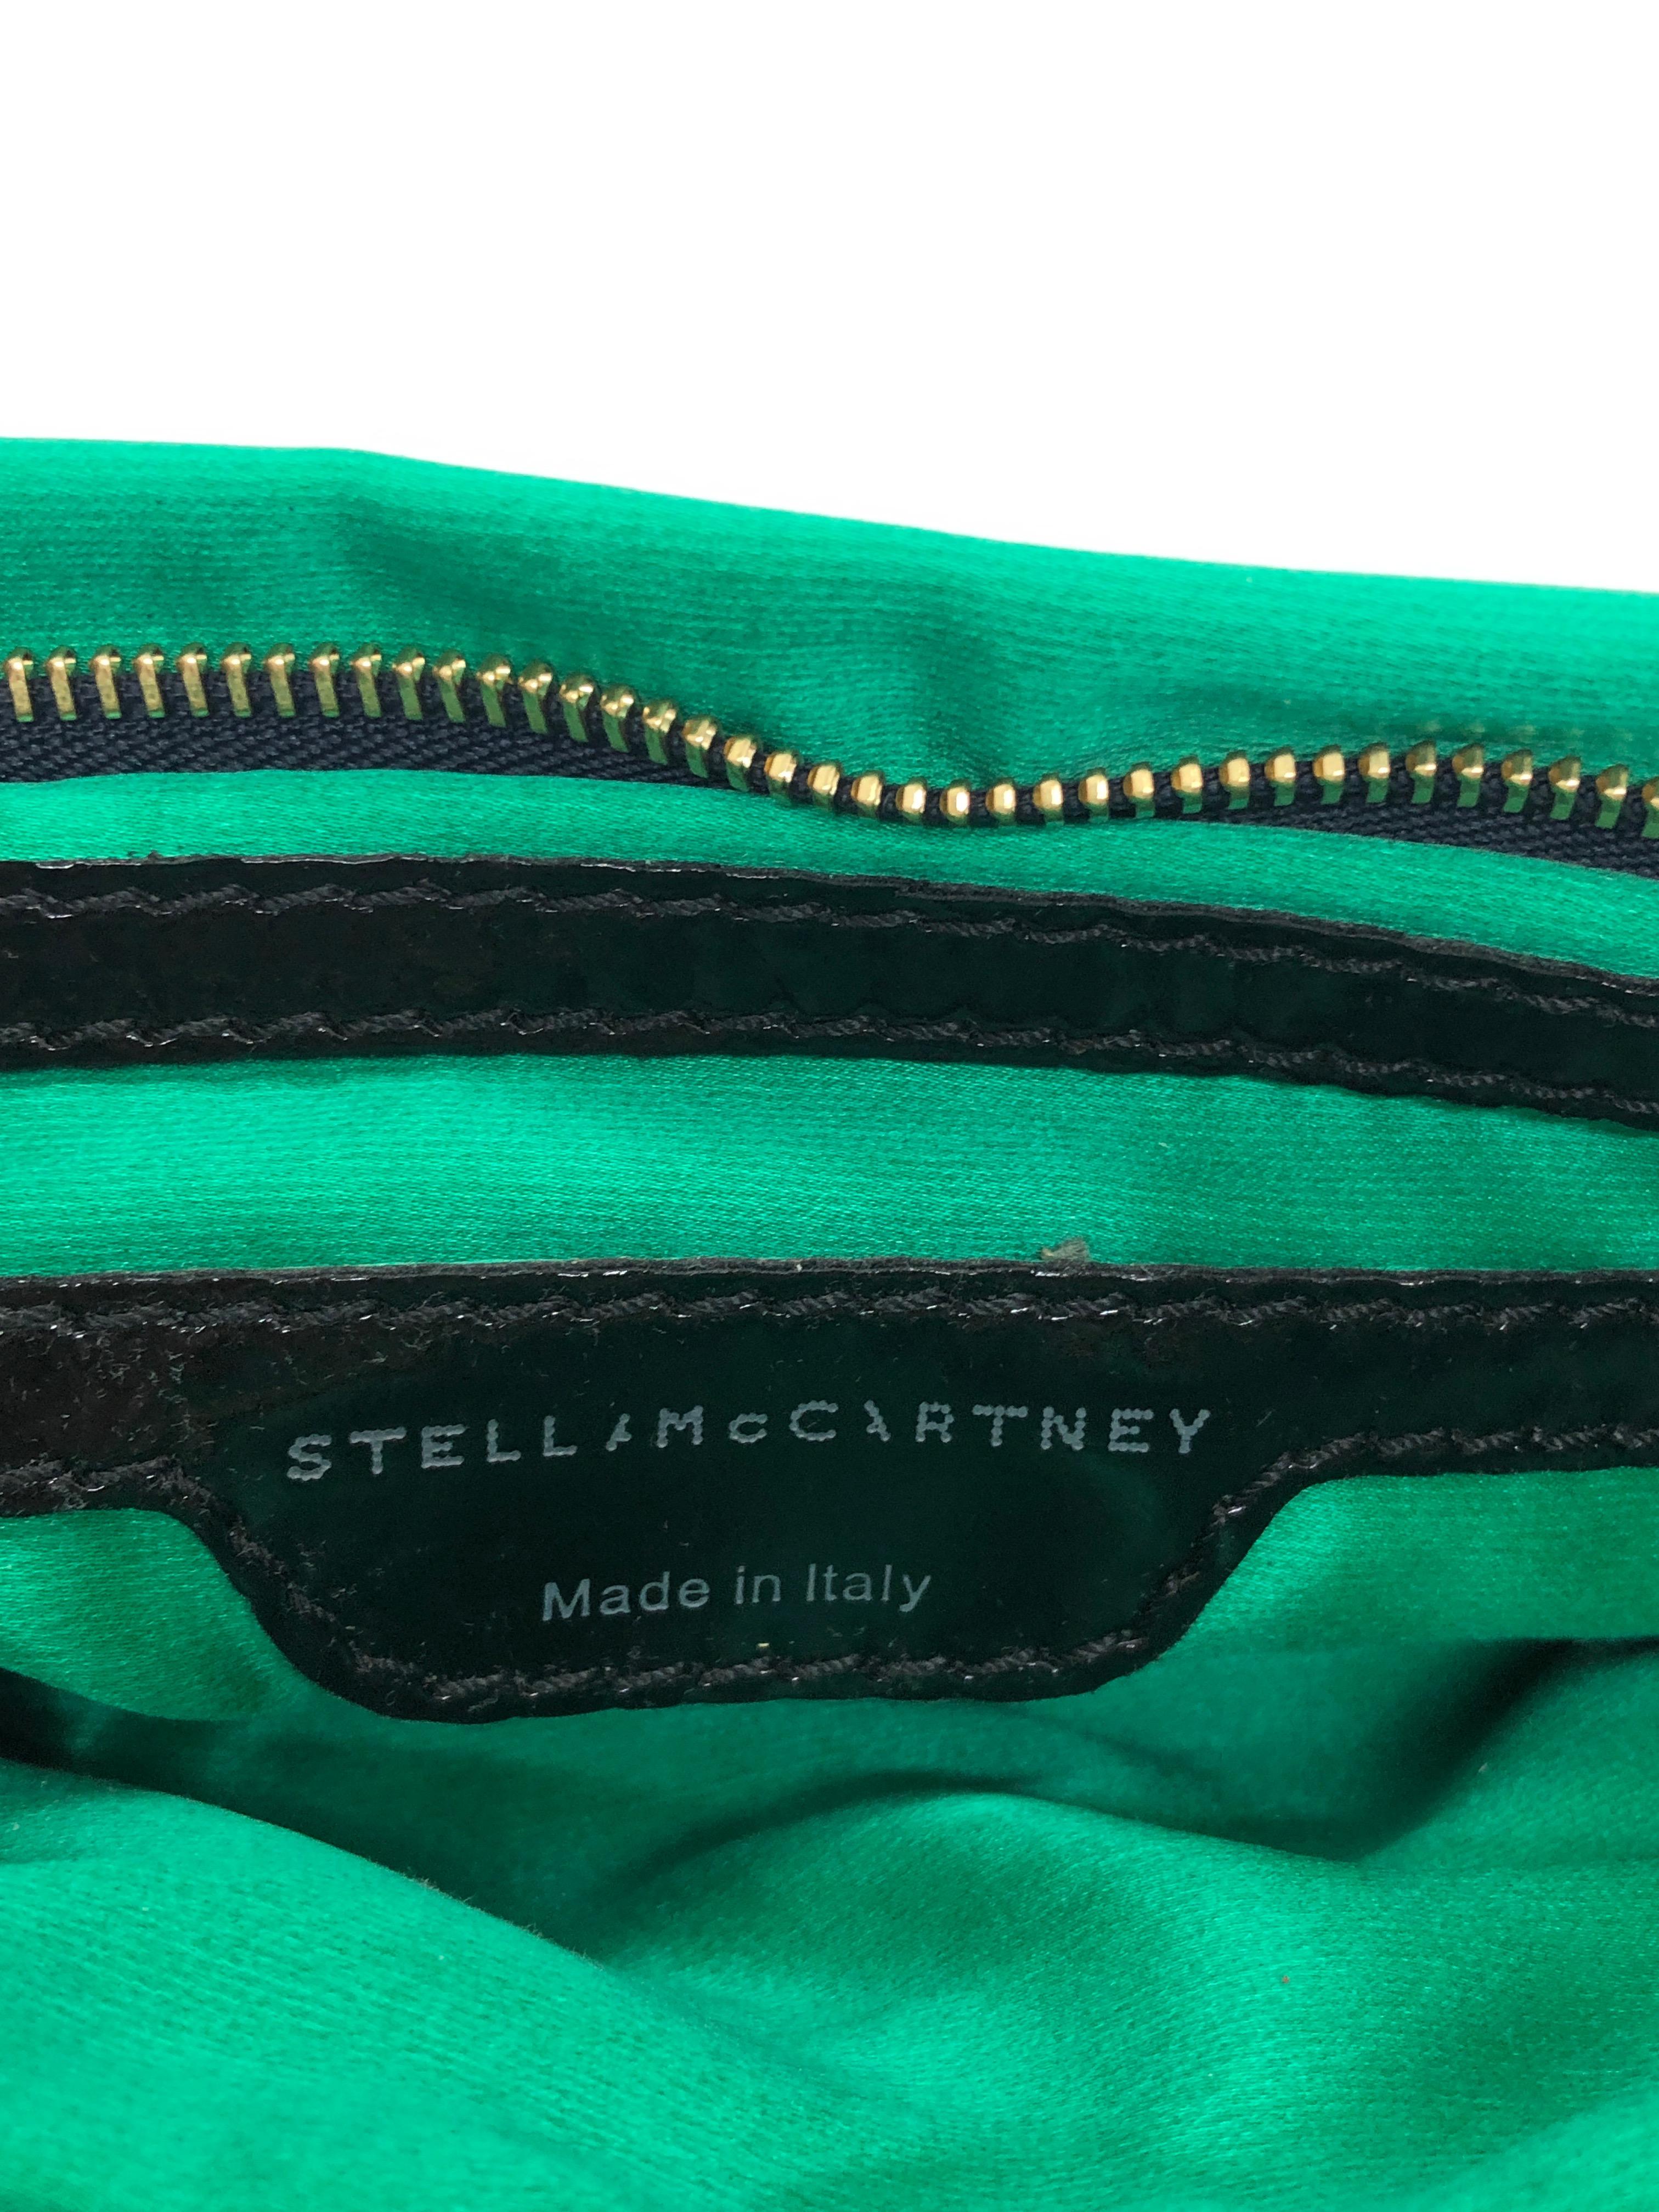 Stella McCartney Green and Tan Satan with Black Patent Trim Clutch / Wristlet  For Sale 6